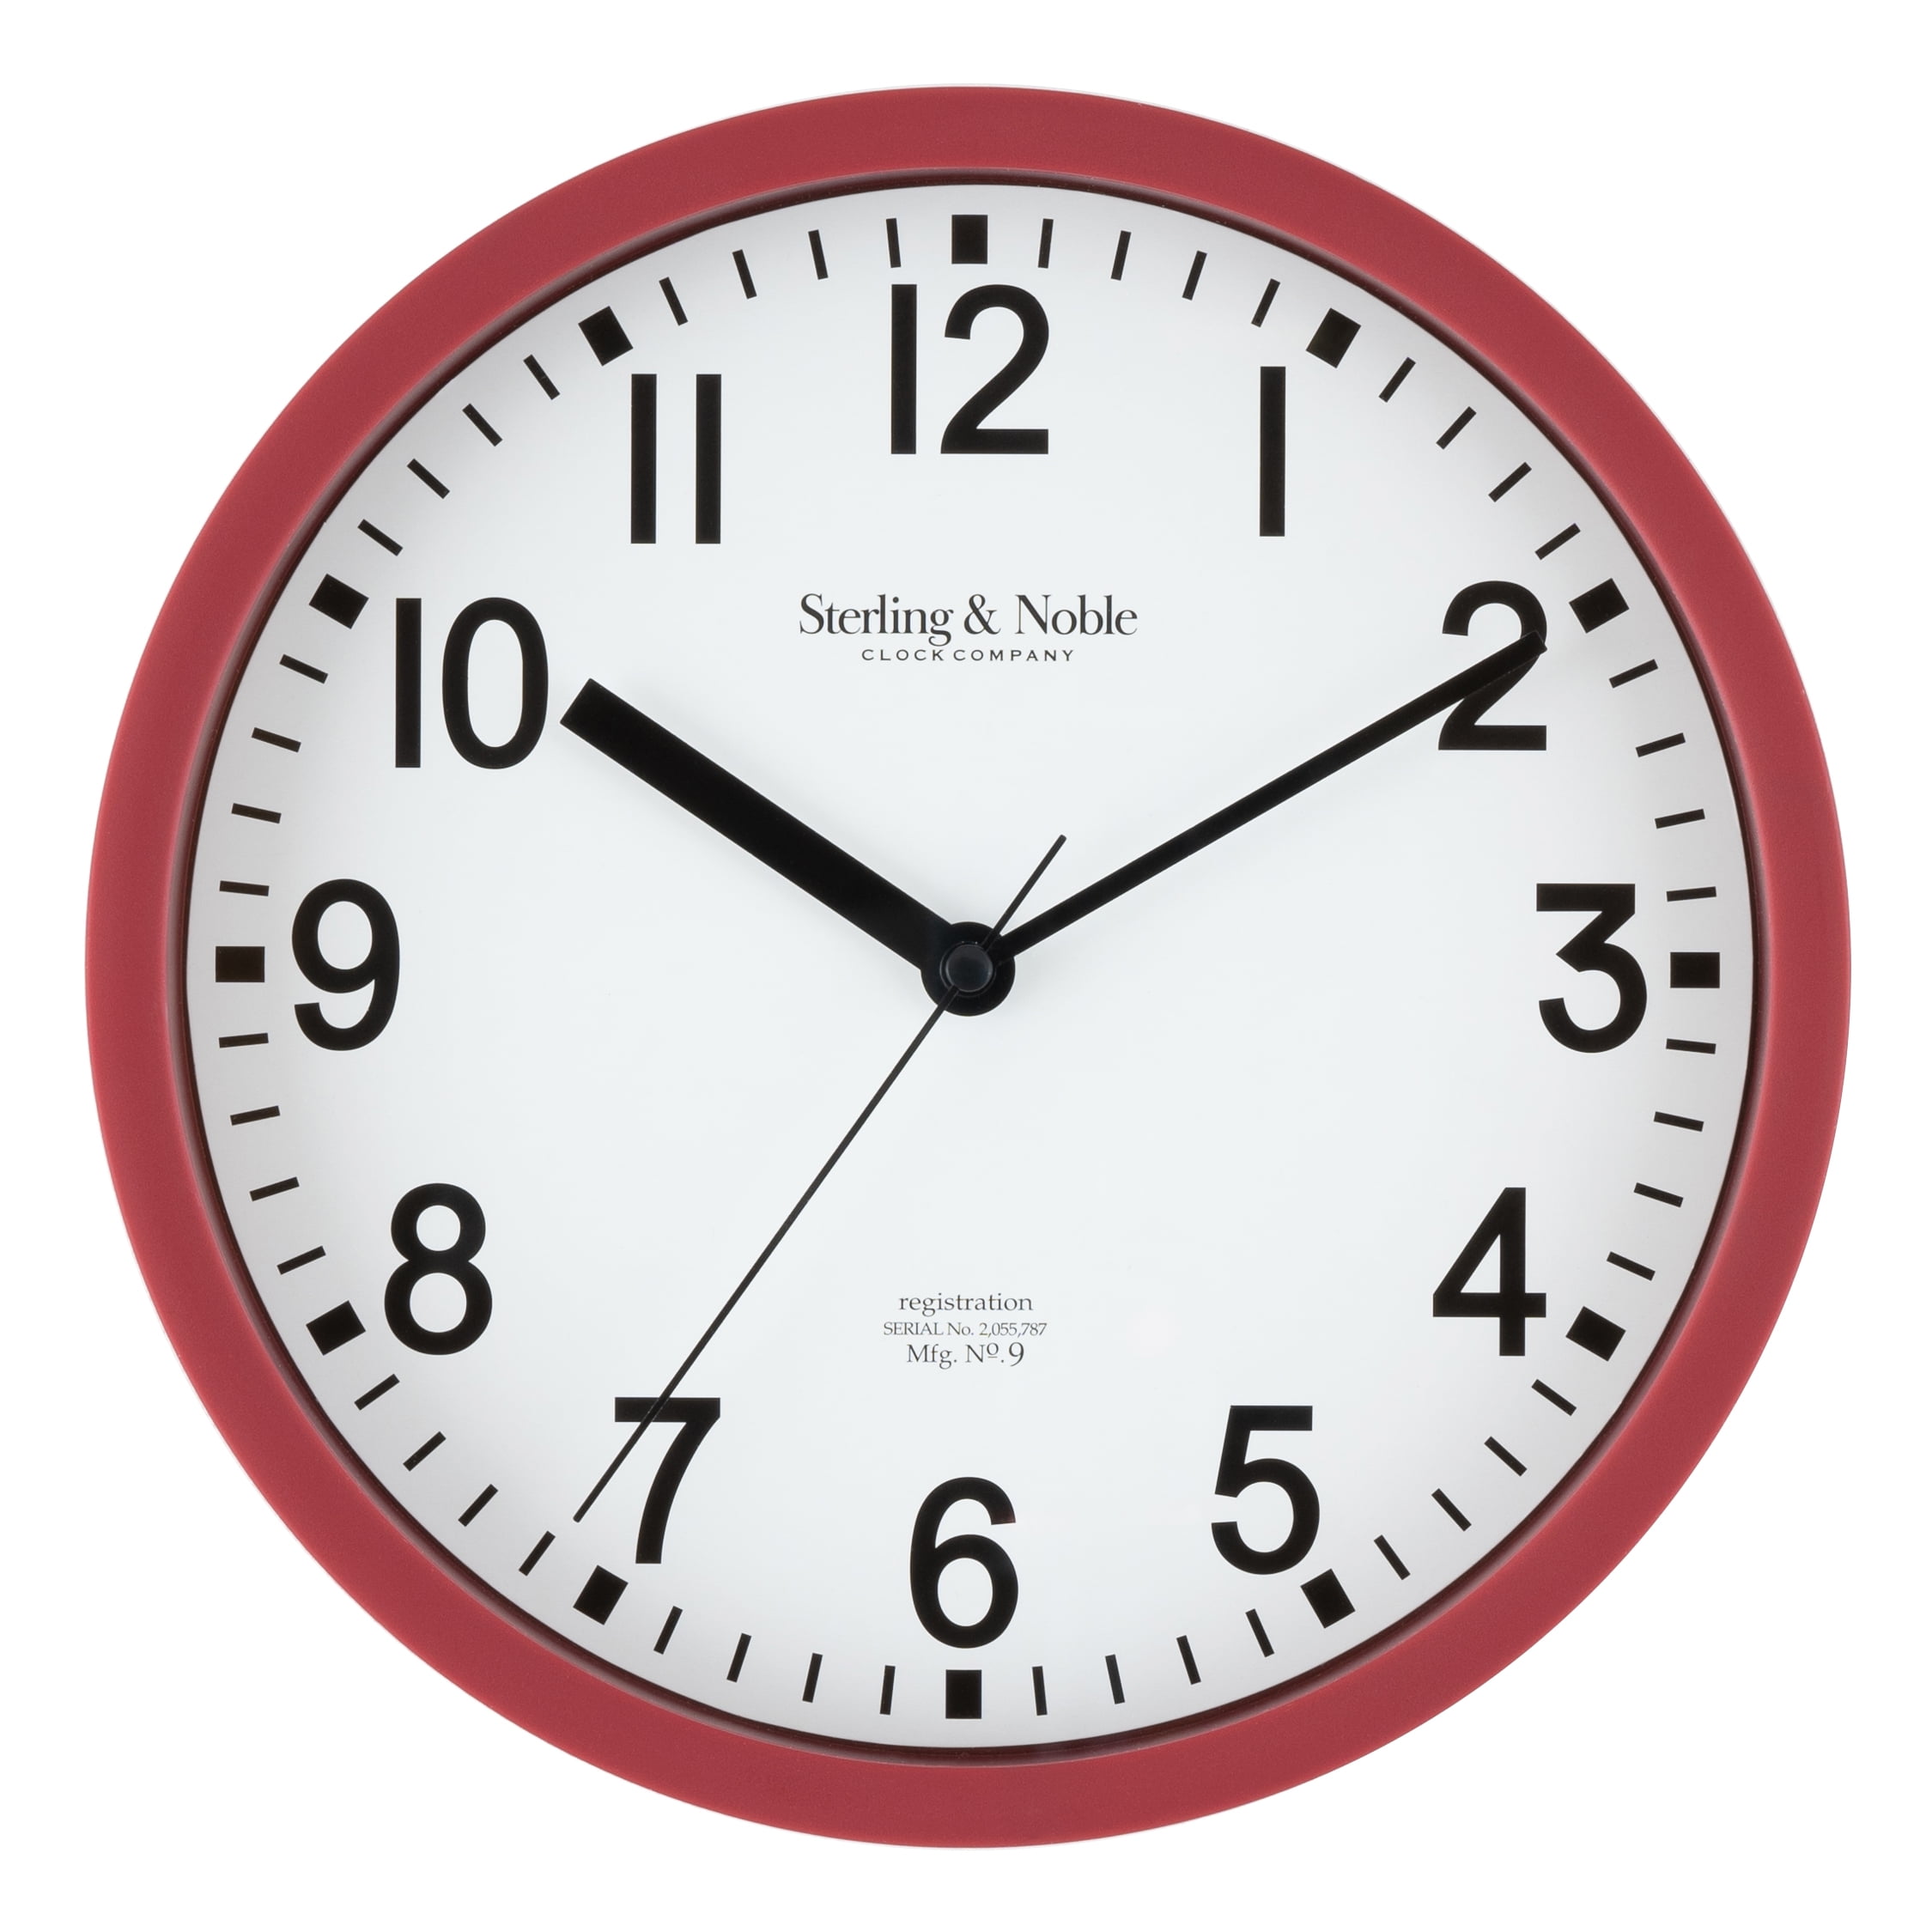 Diameter Quartz Wall Clock Decorative Plastic Red Sterling & Noble 8.78 in 